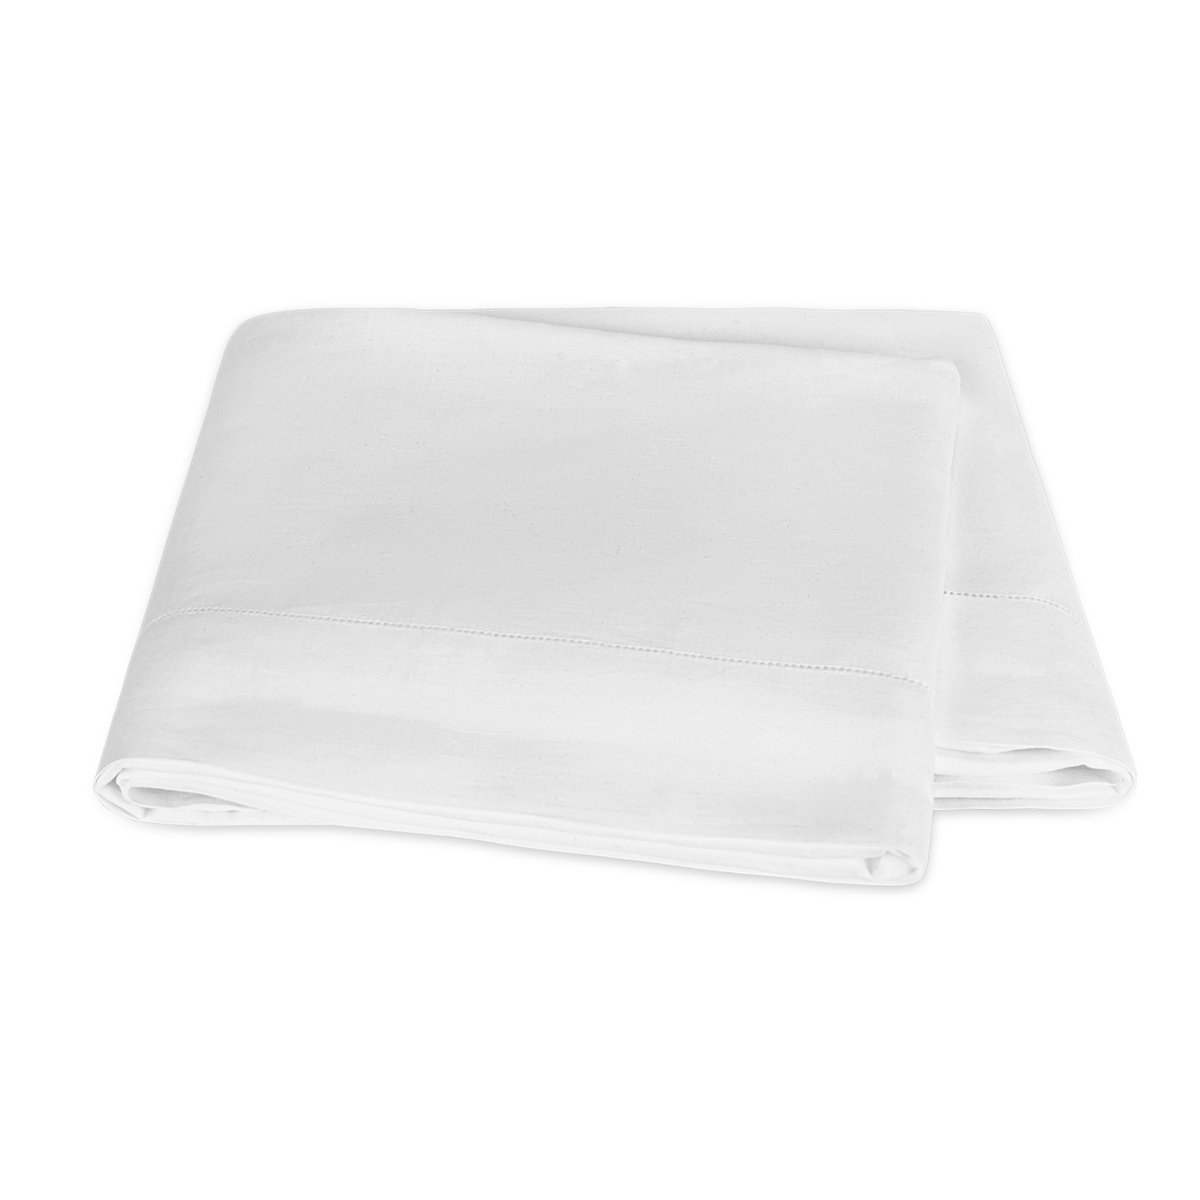 Folded Flat Sheet of Matouk Roman Hemstitch Bedding Color White